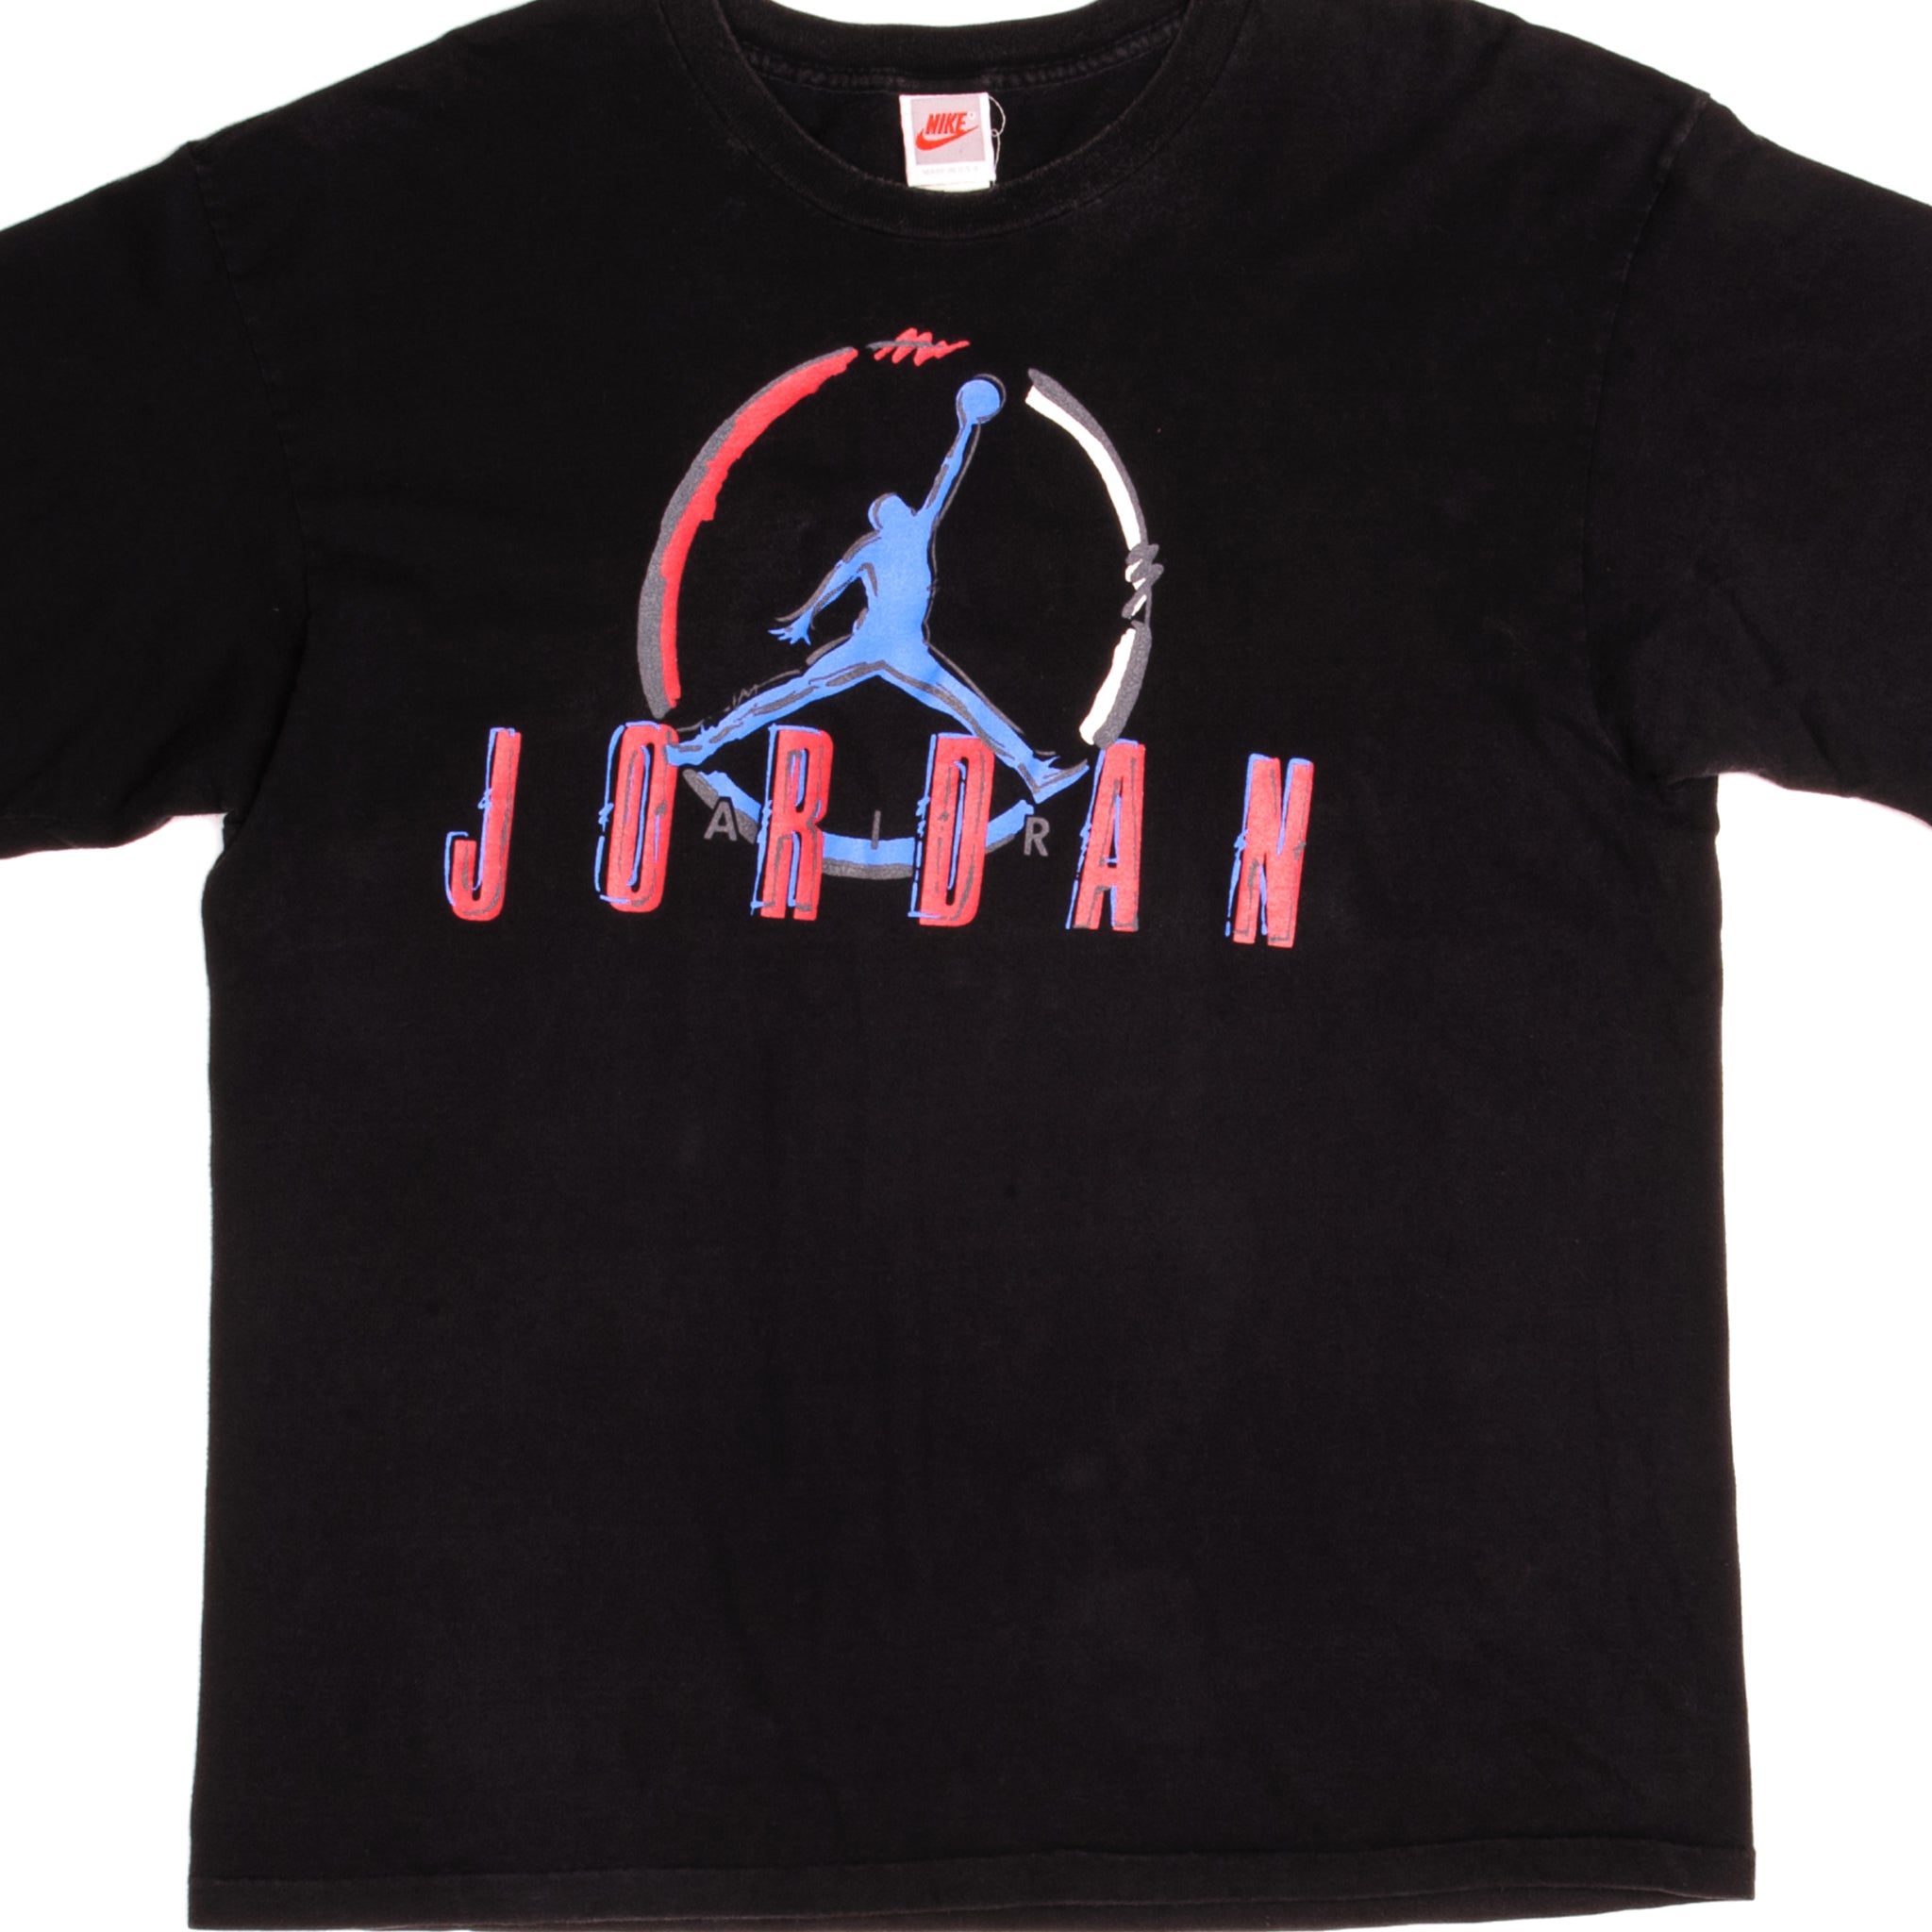 Vintage Michael Jordan Nike T-Shirt